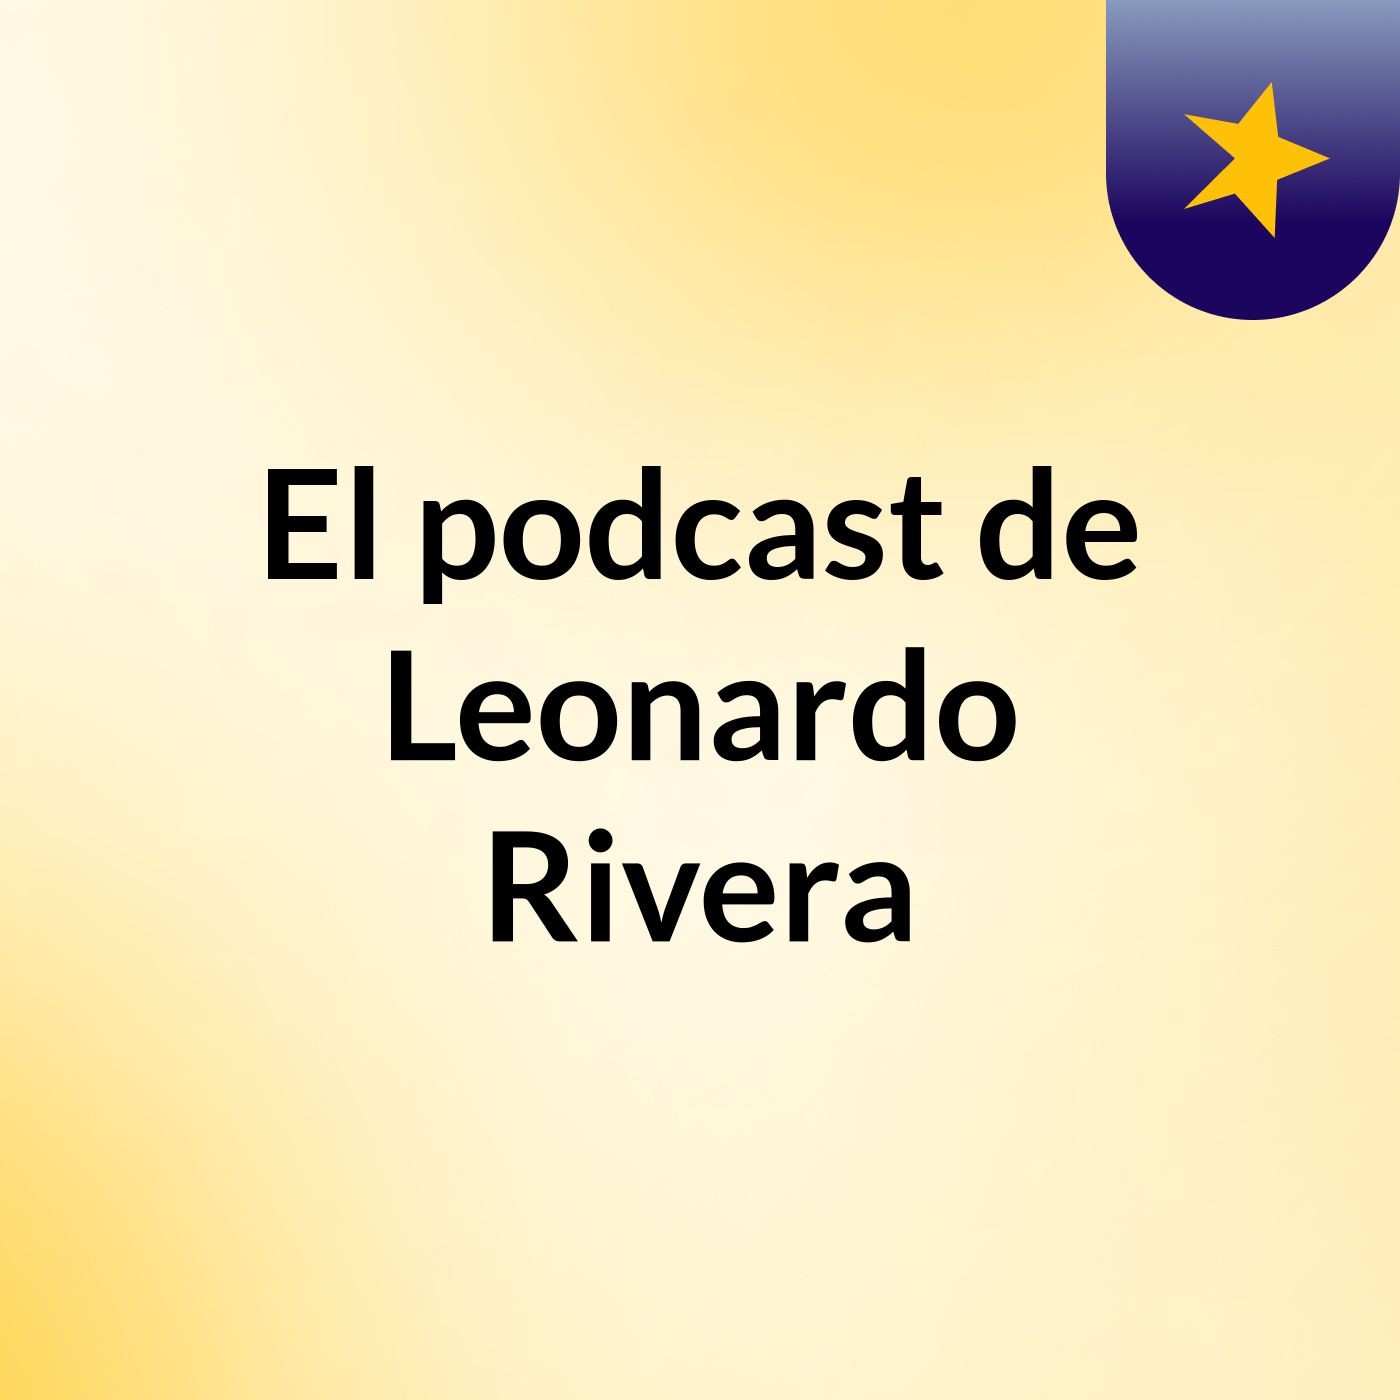 El podcast de Leonardo Rivera